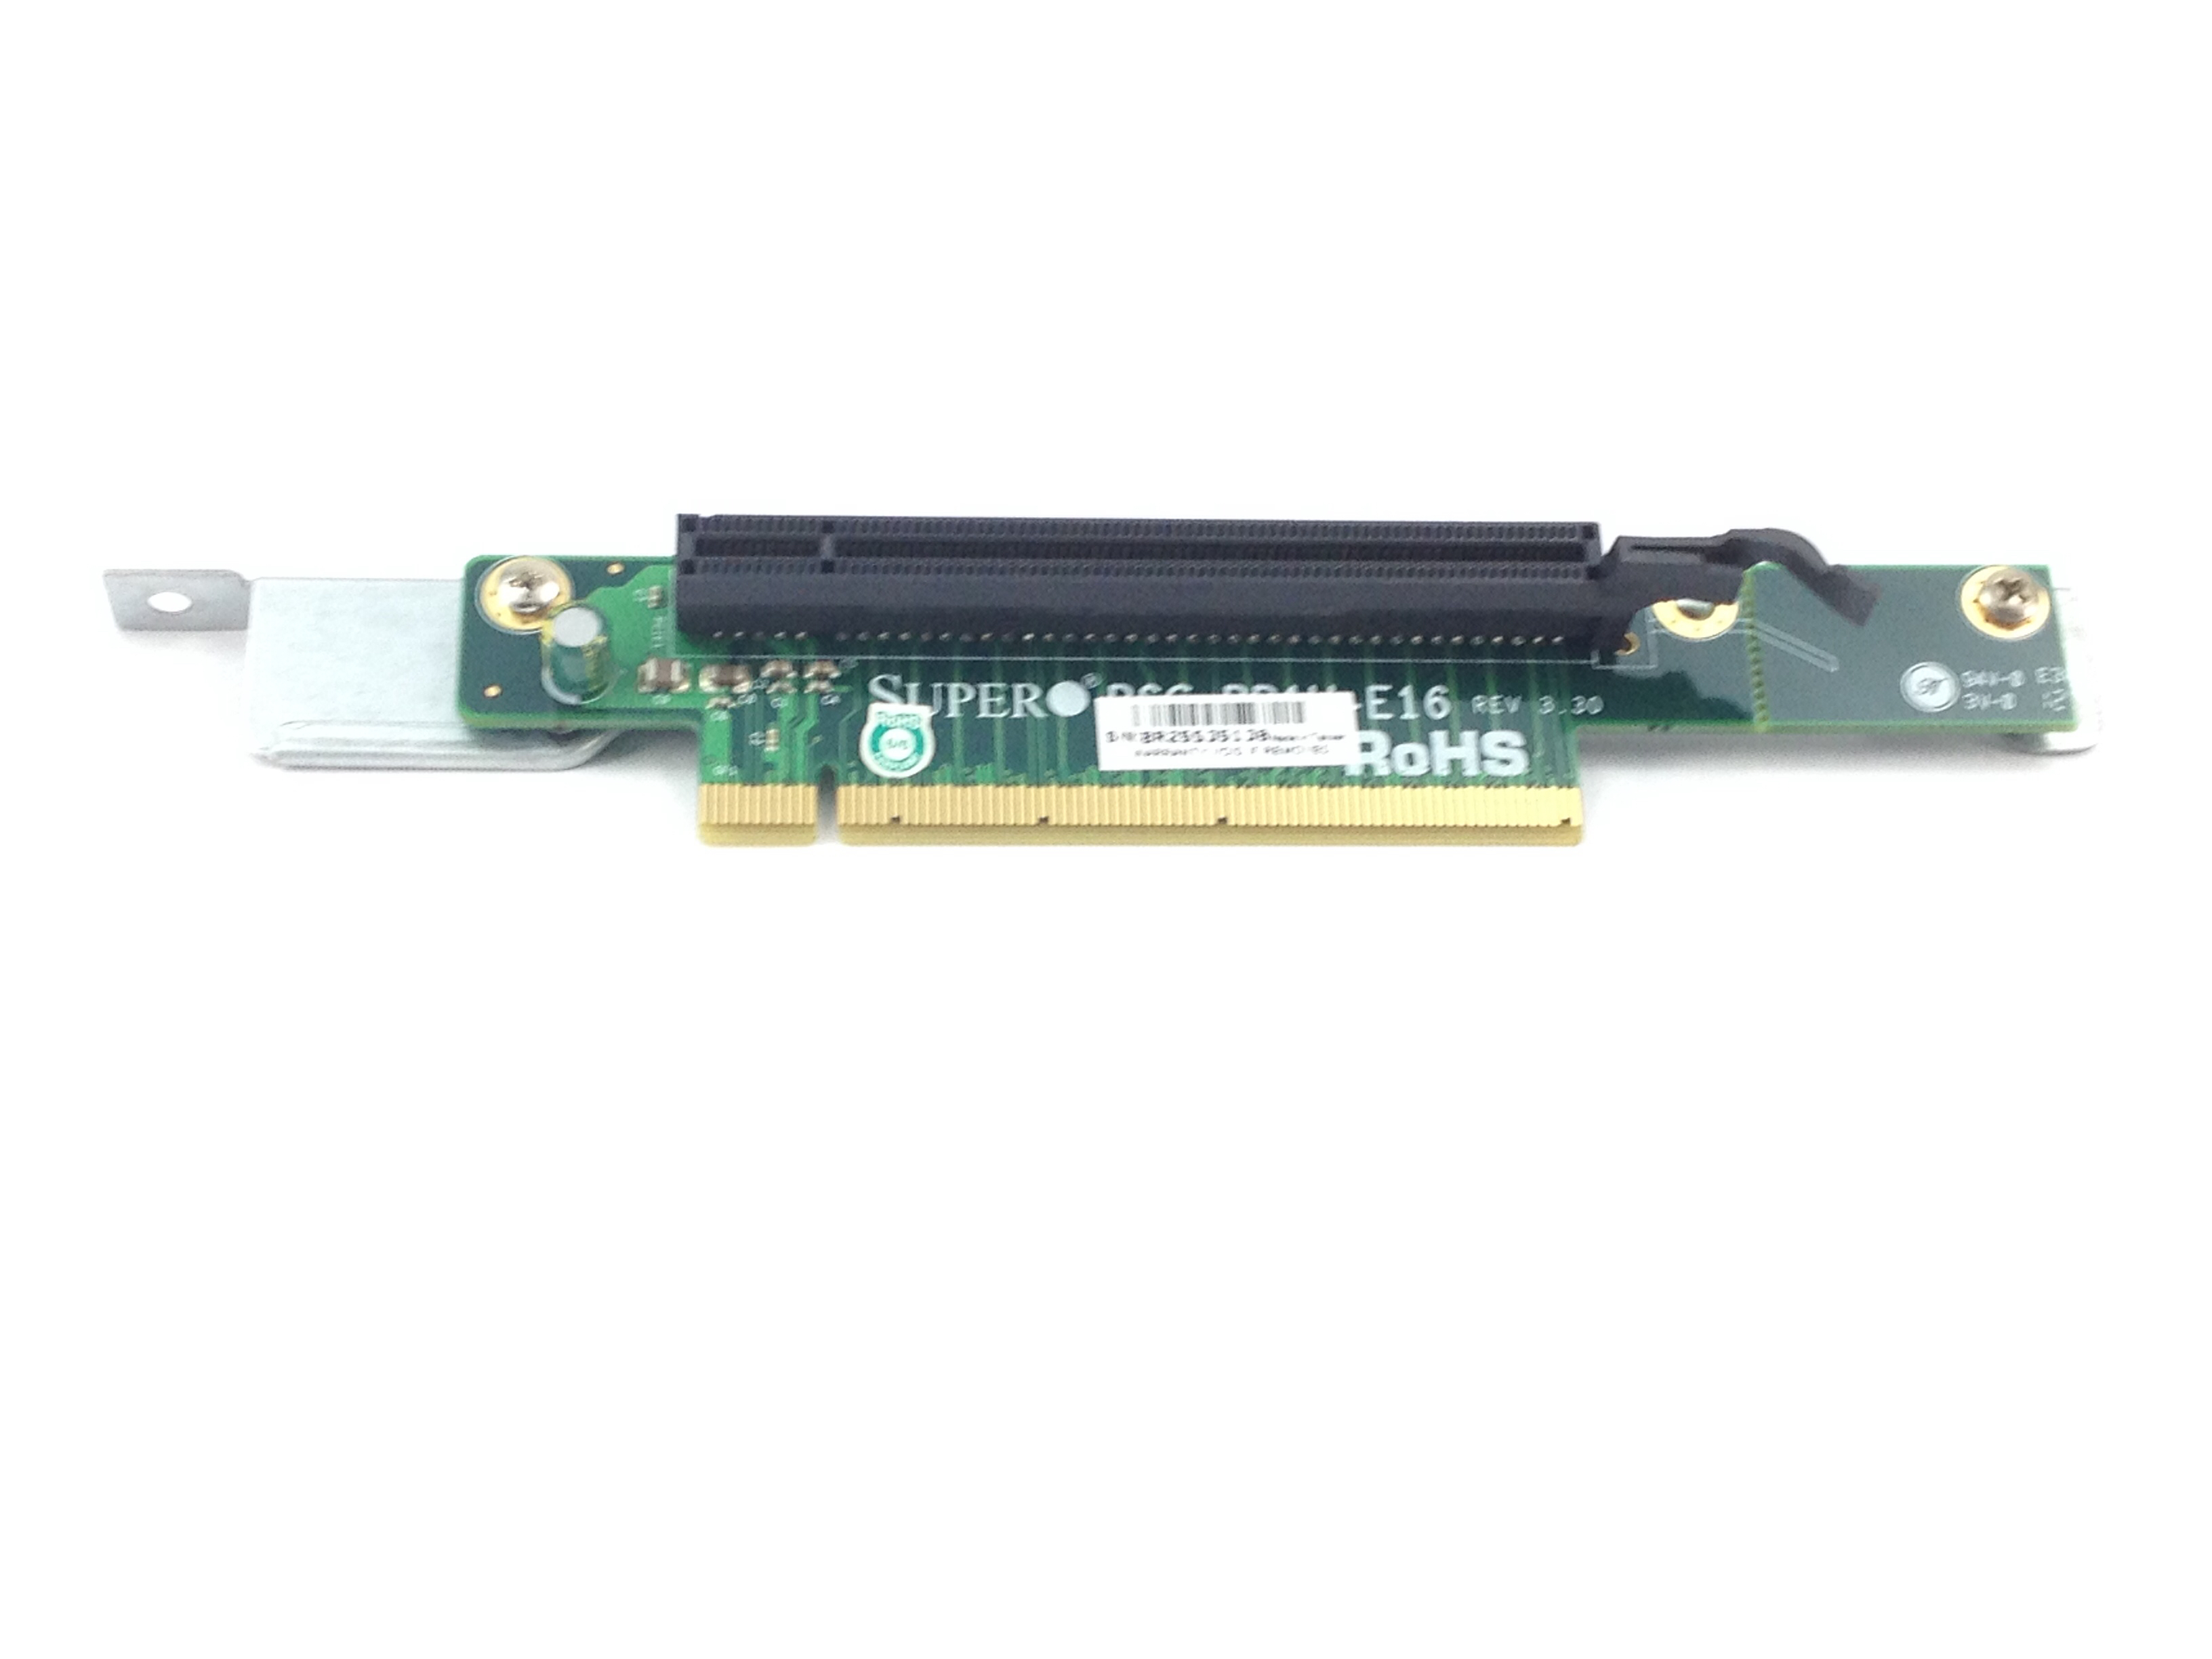 SUPERMICRO 1U PCI-E X 16 RISER CARD (RSC-RR1U-E16)